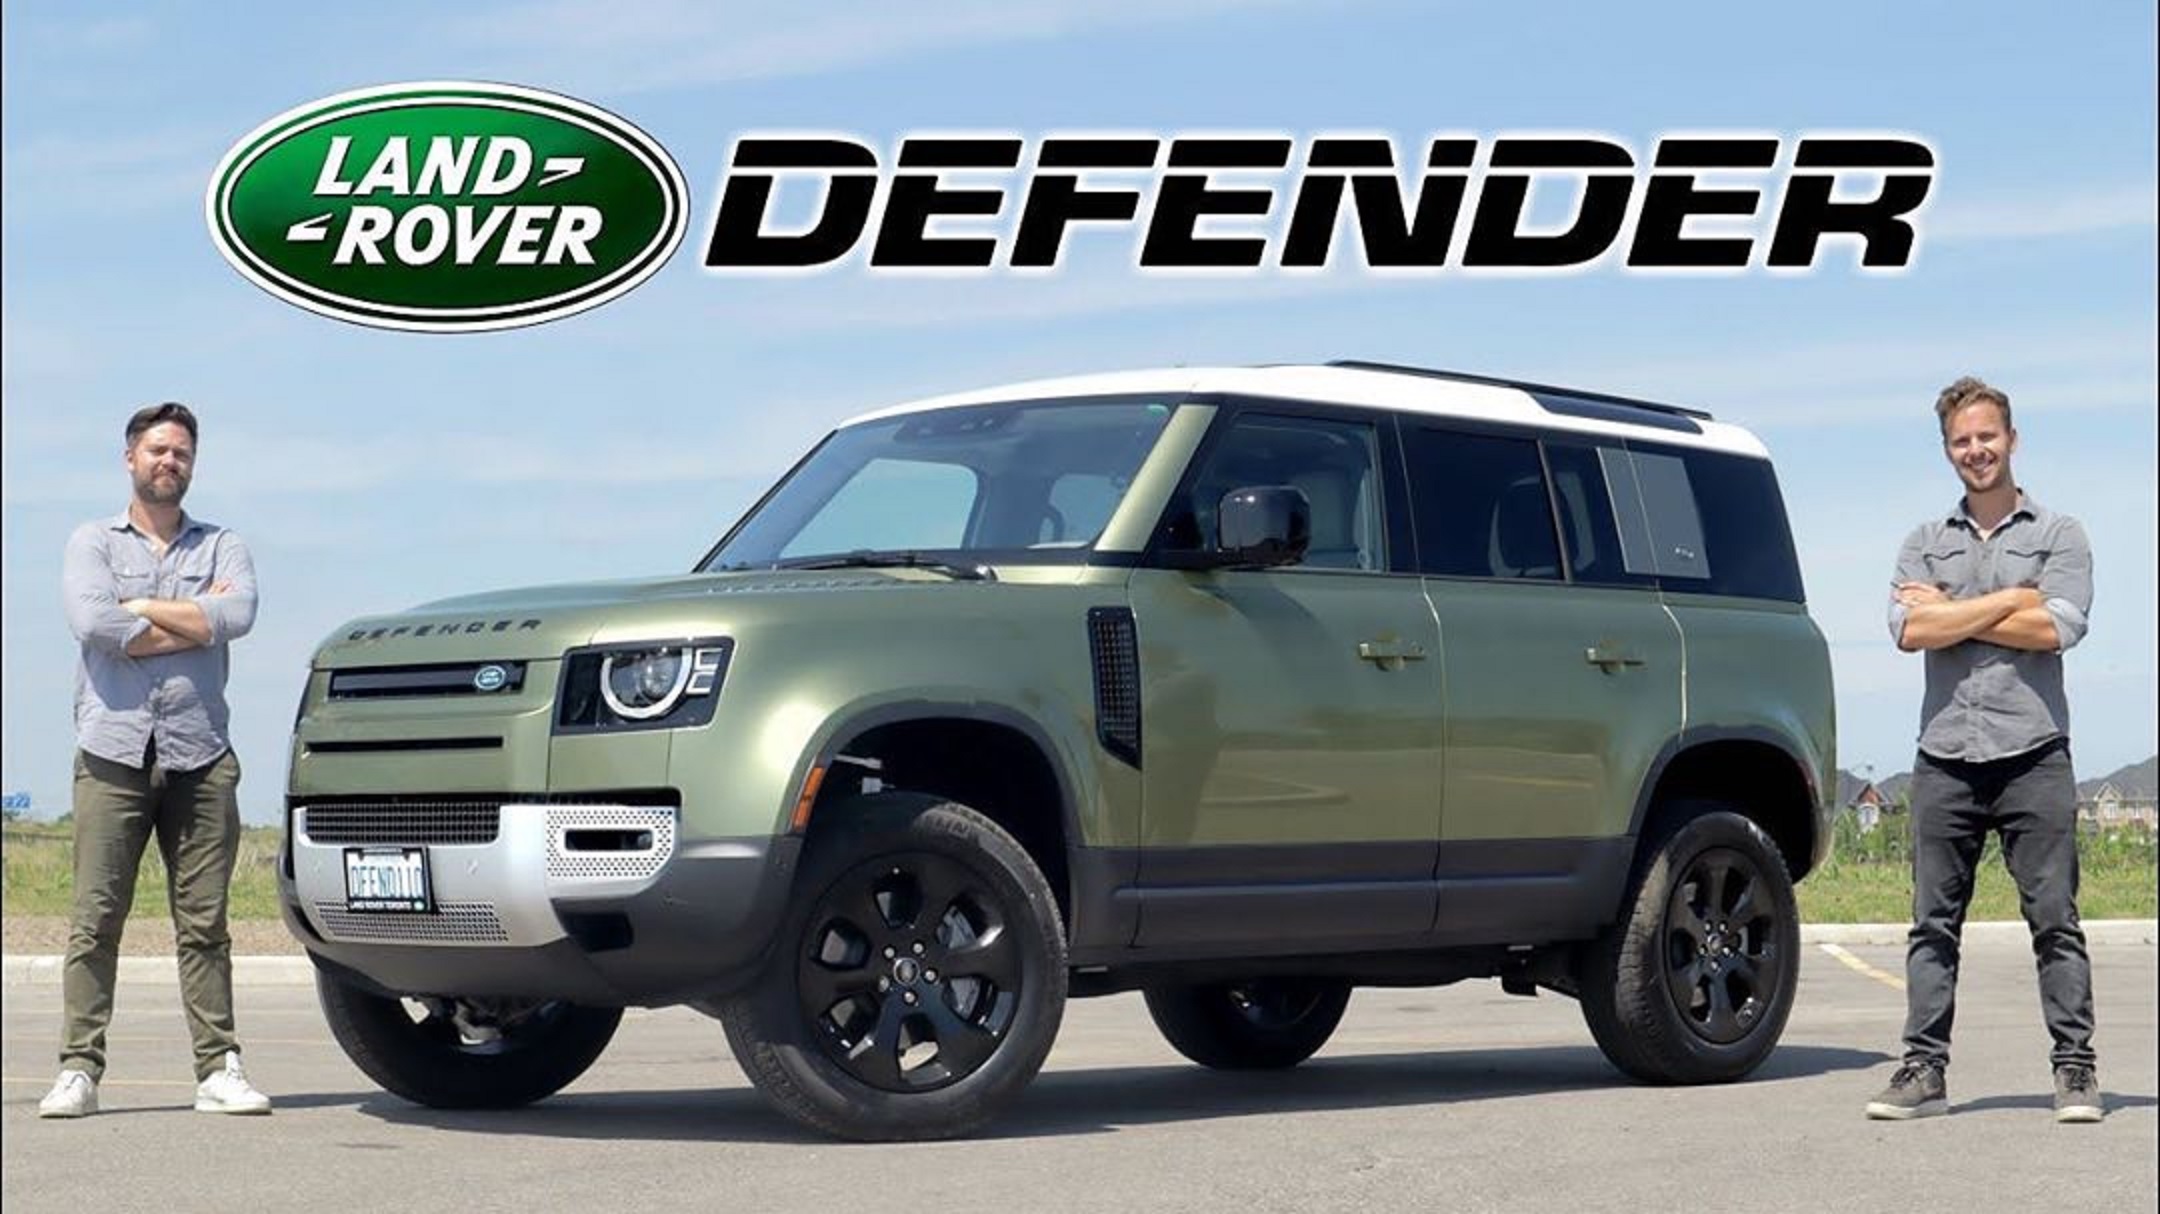 A green 2020 Land Rover Defender